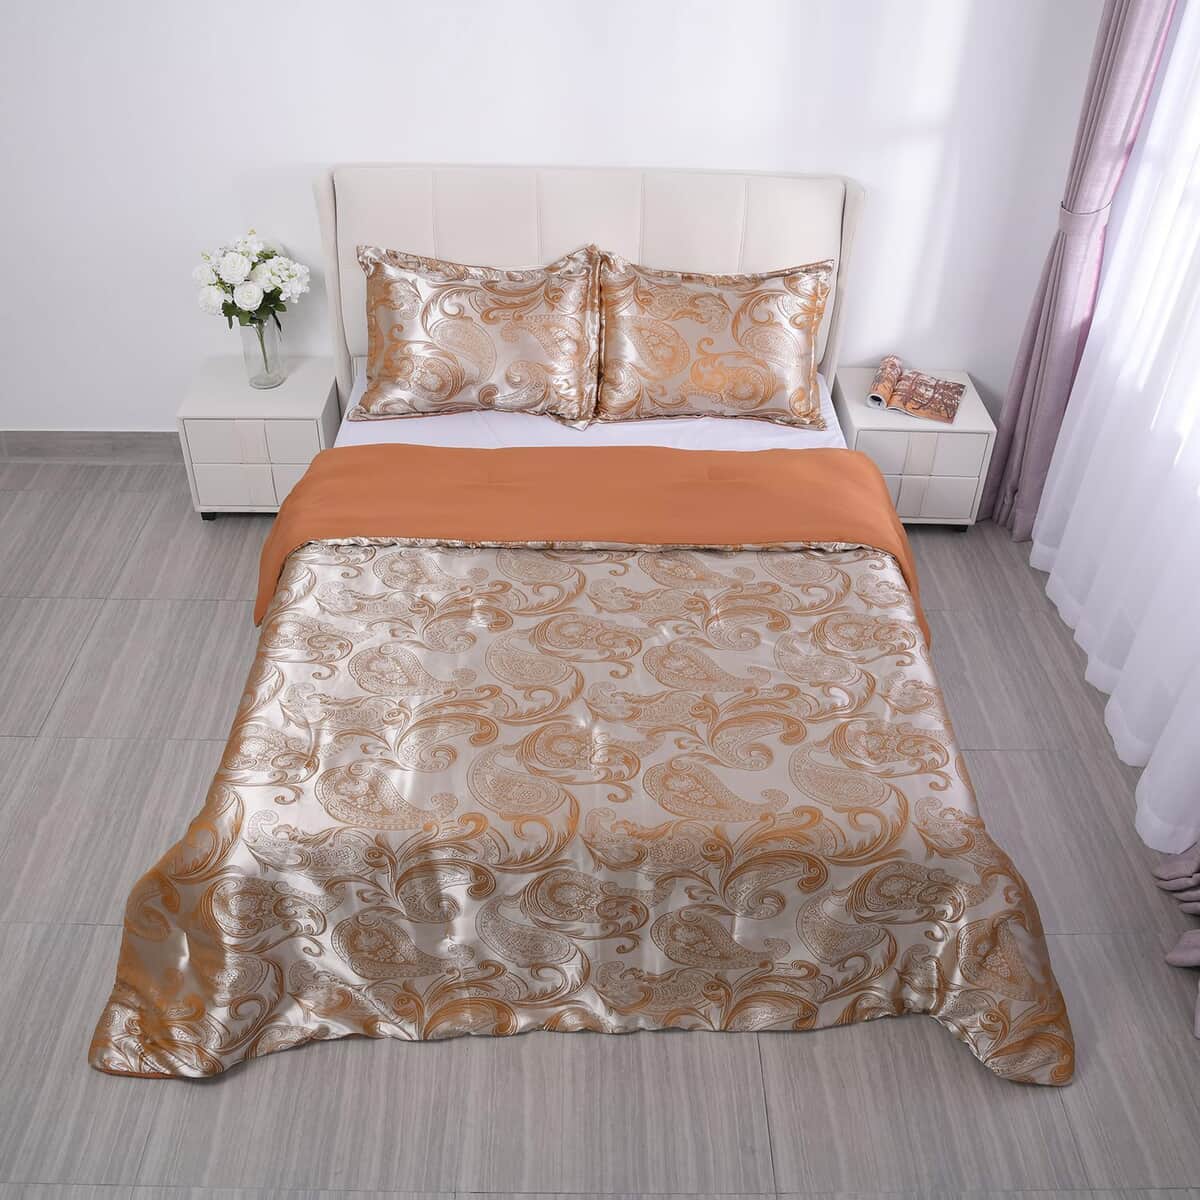 Homesmart Golden Satin Jacquard Floral Pattern Comforter Set - 1 Comforter and 2 Pillowcases (Queen Size) image number 5